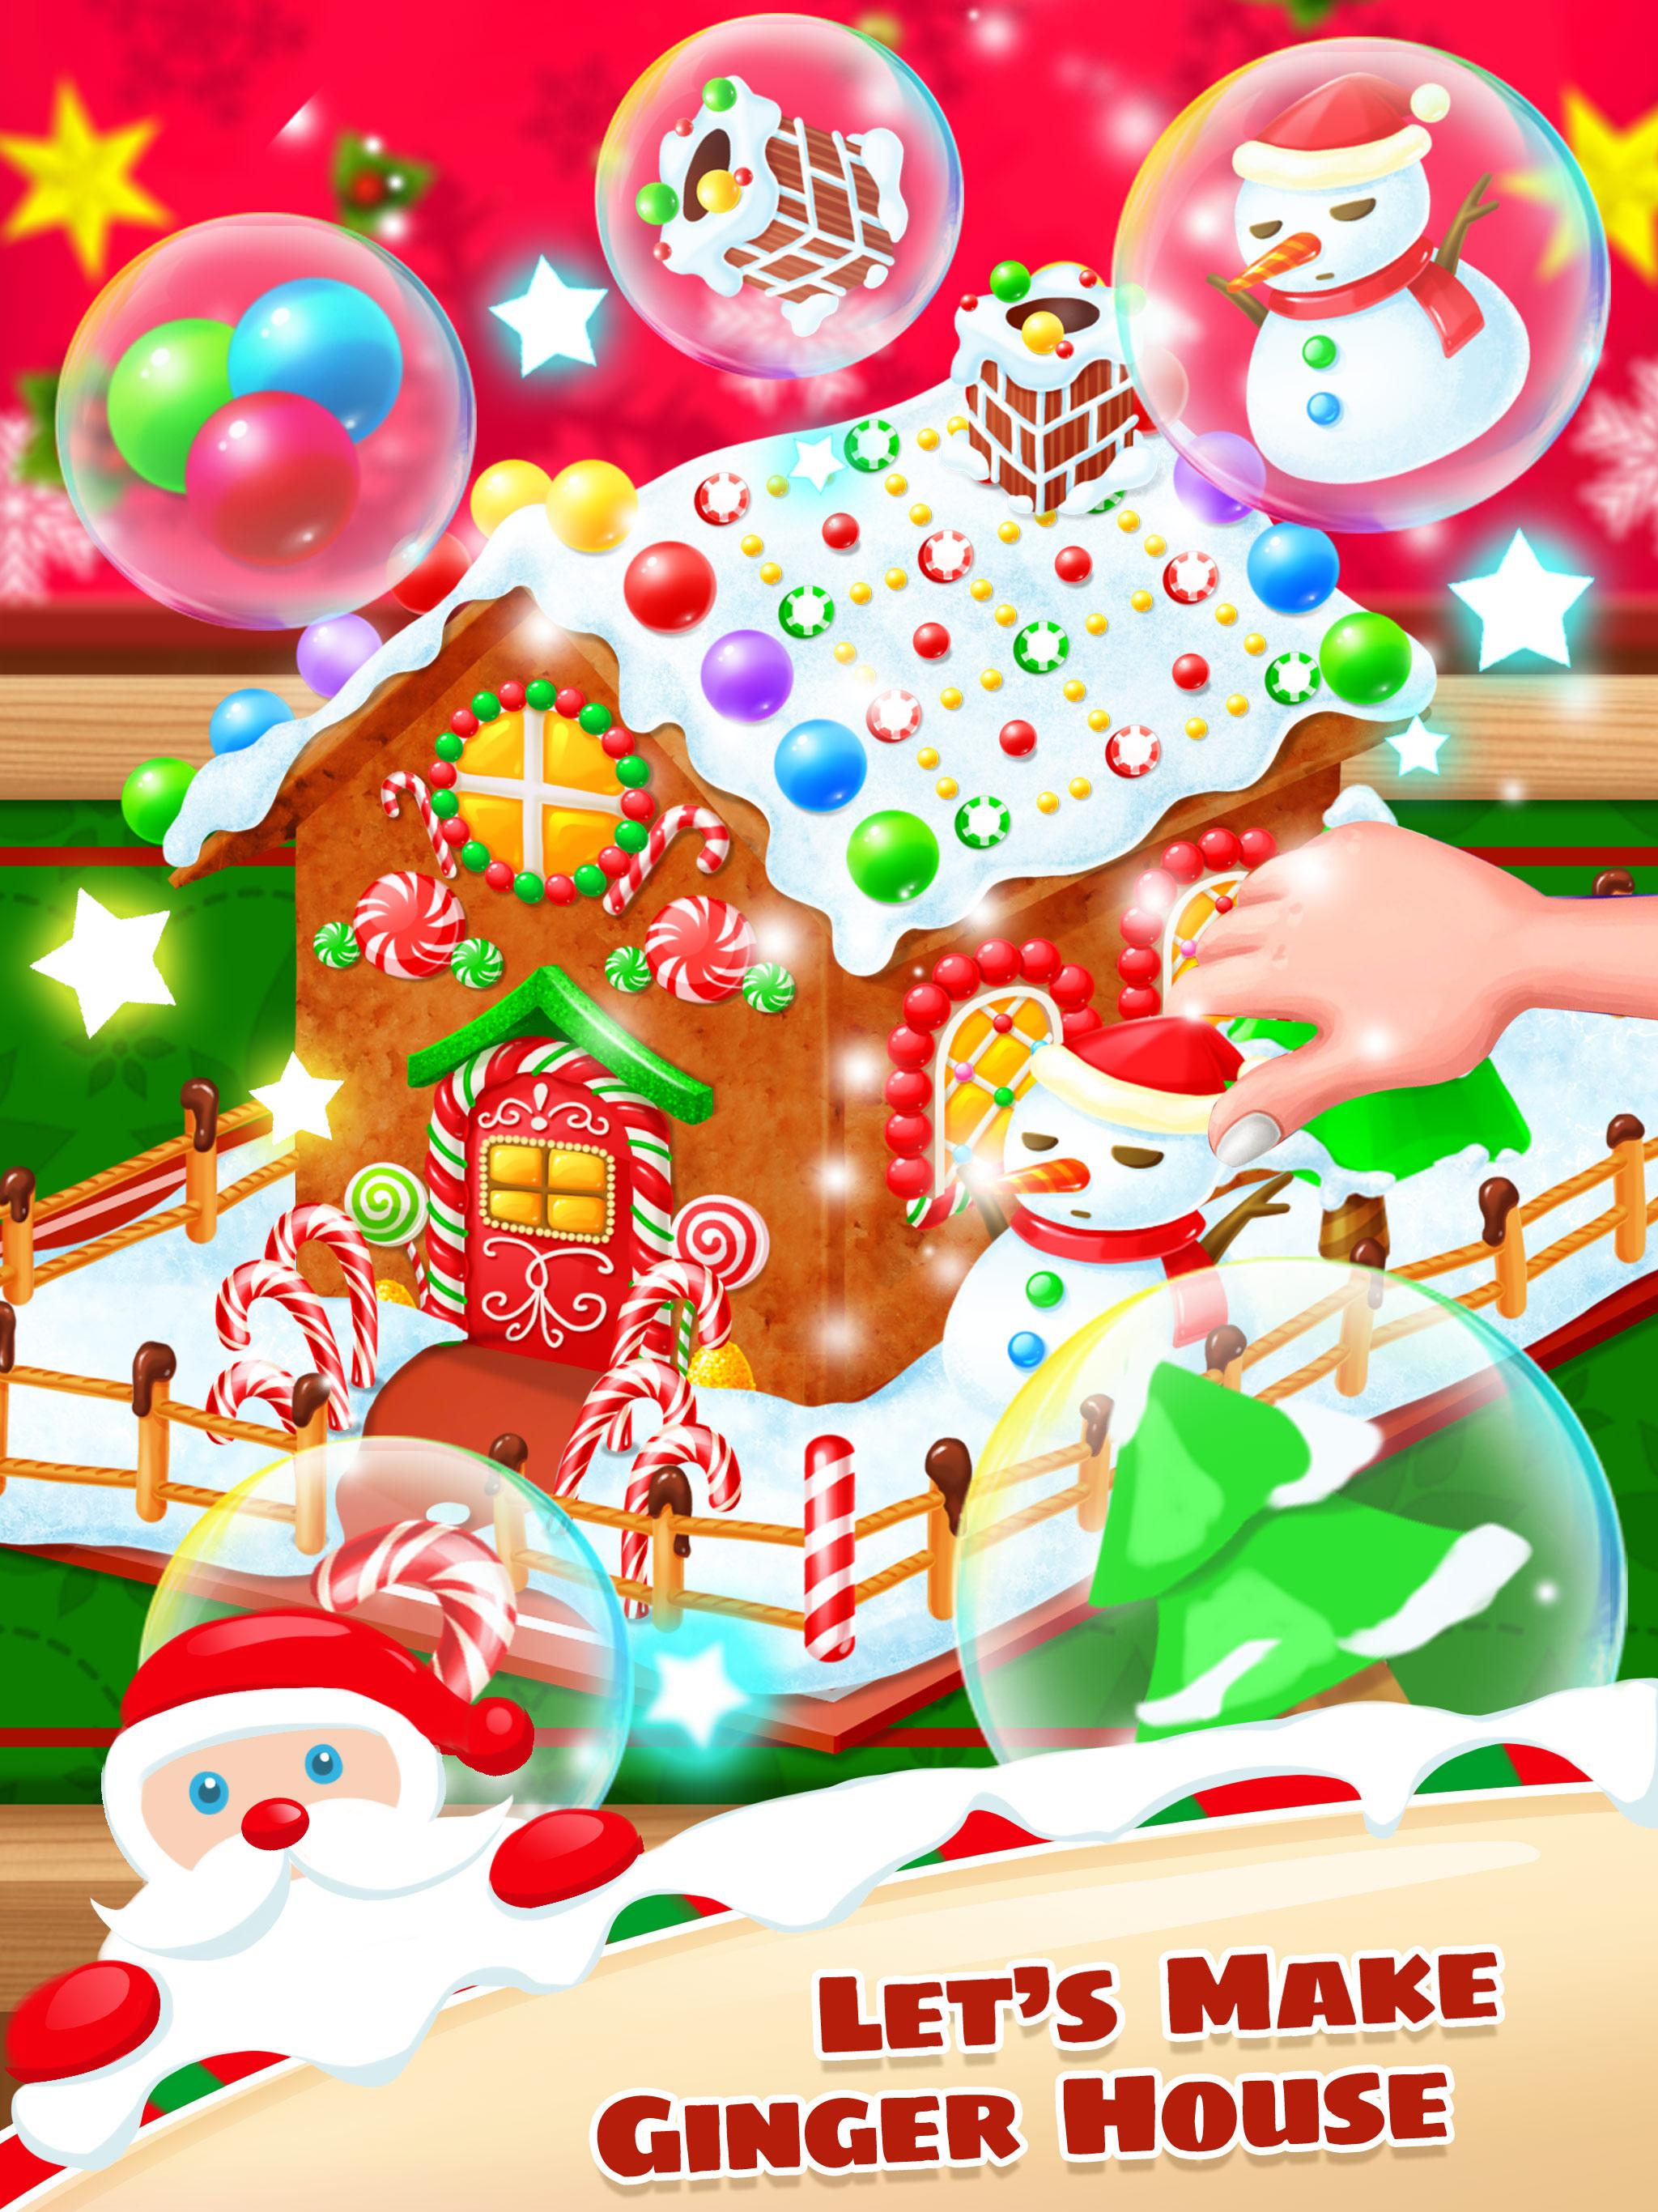 Christmas Cookies Party - Sweet Desserts 1.0 Screenshot 11